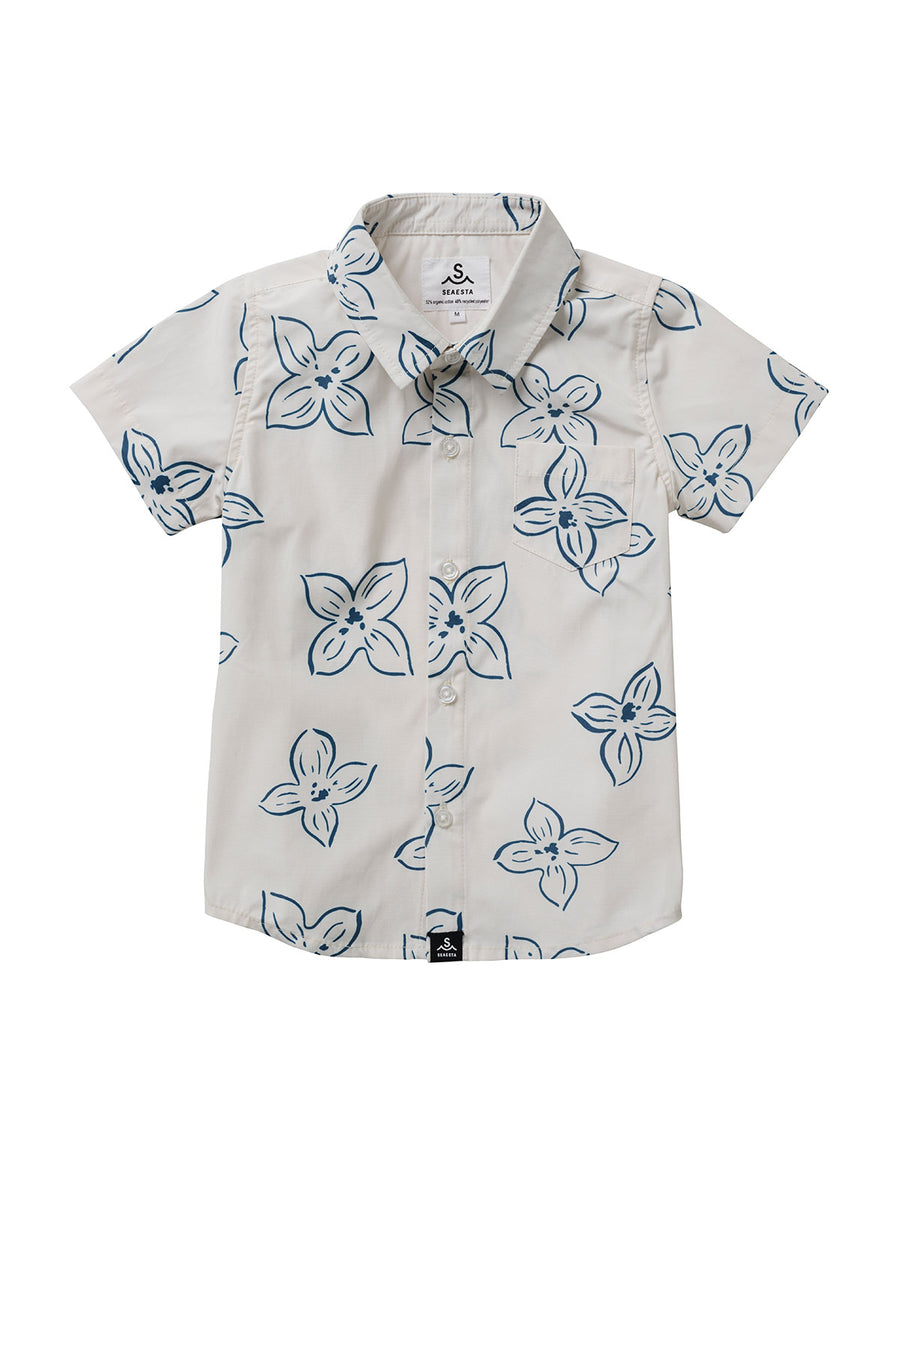 Seaesta Surf x Leah Bradley / Button Up Shirt / Floral